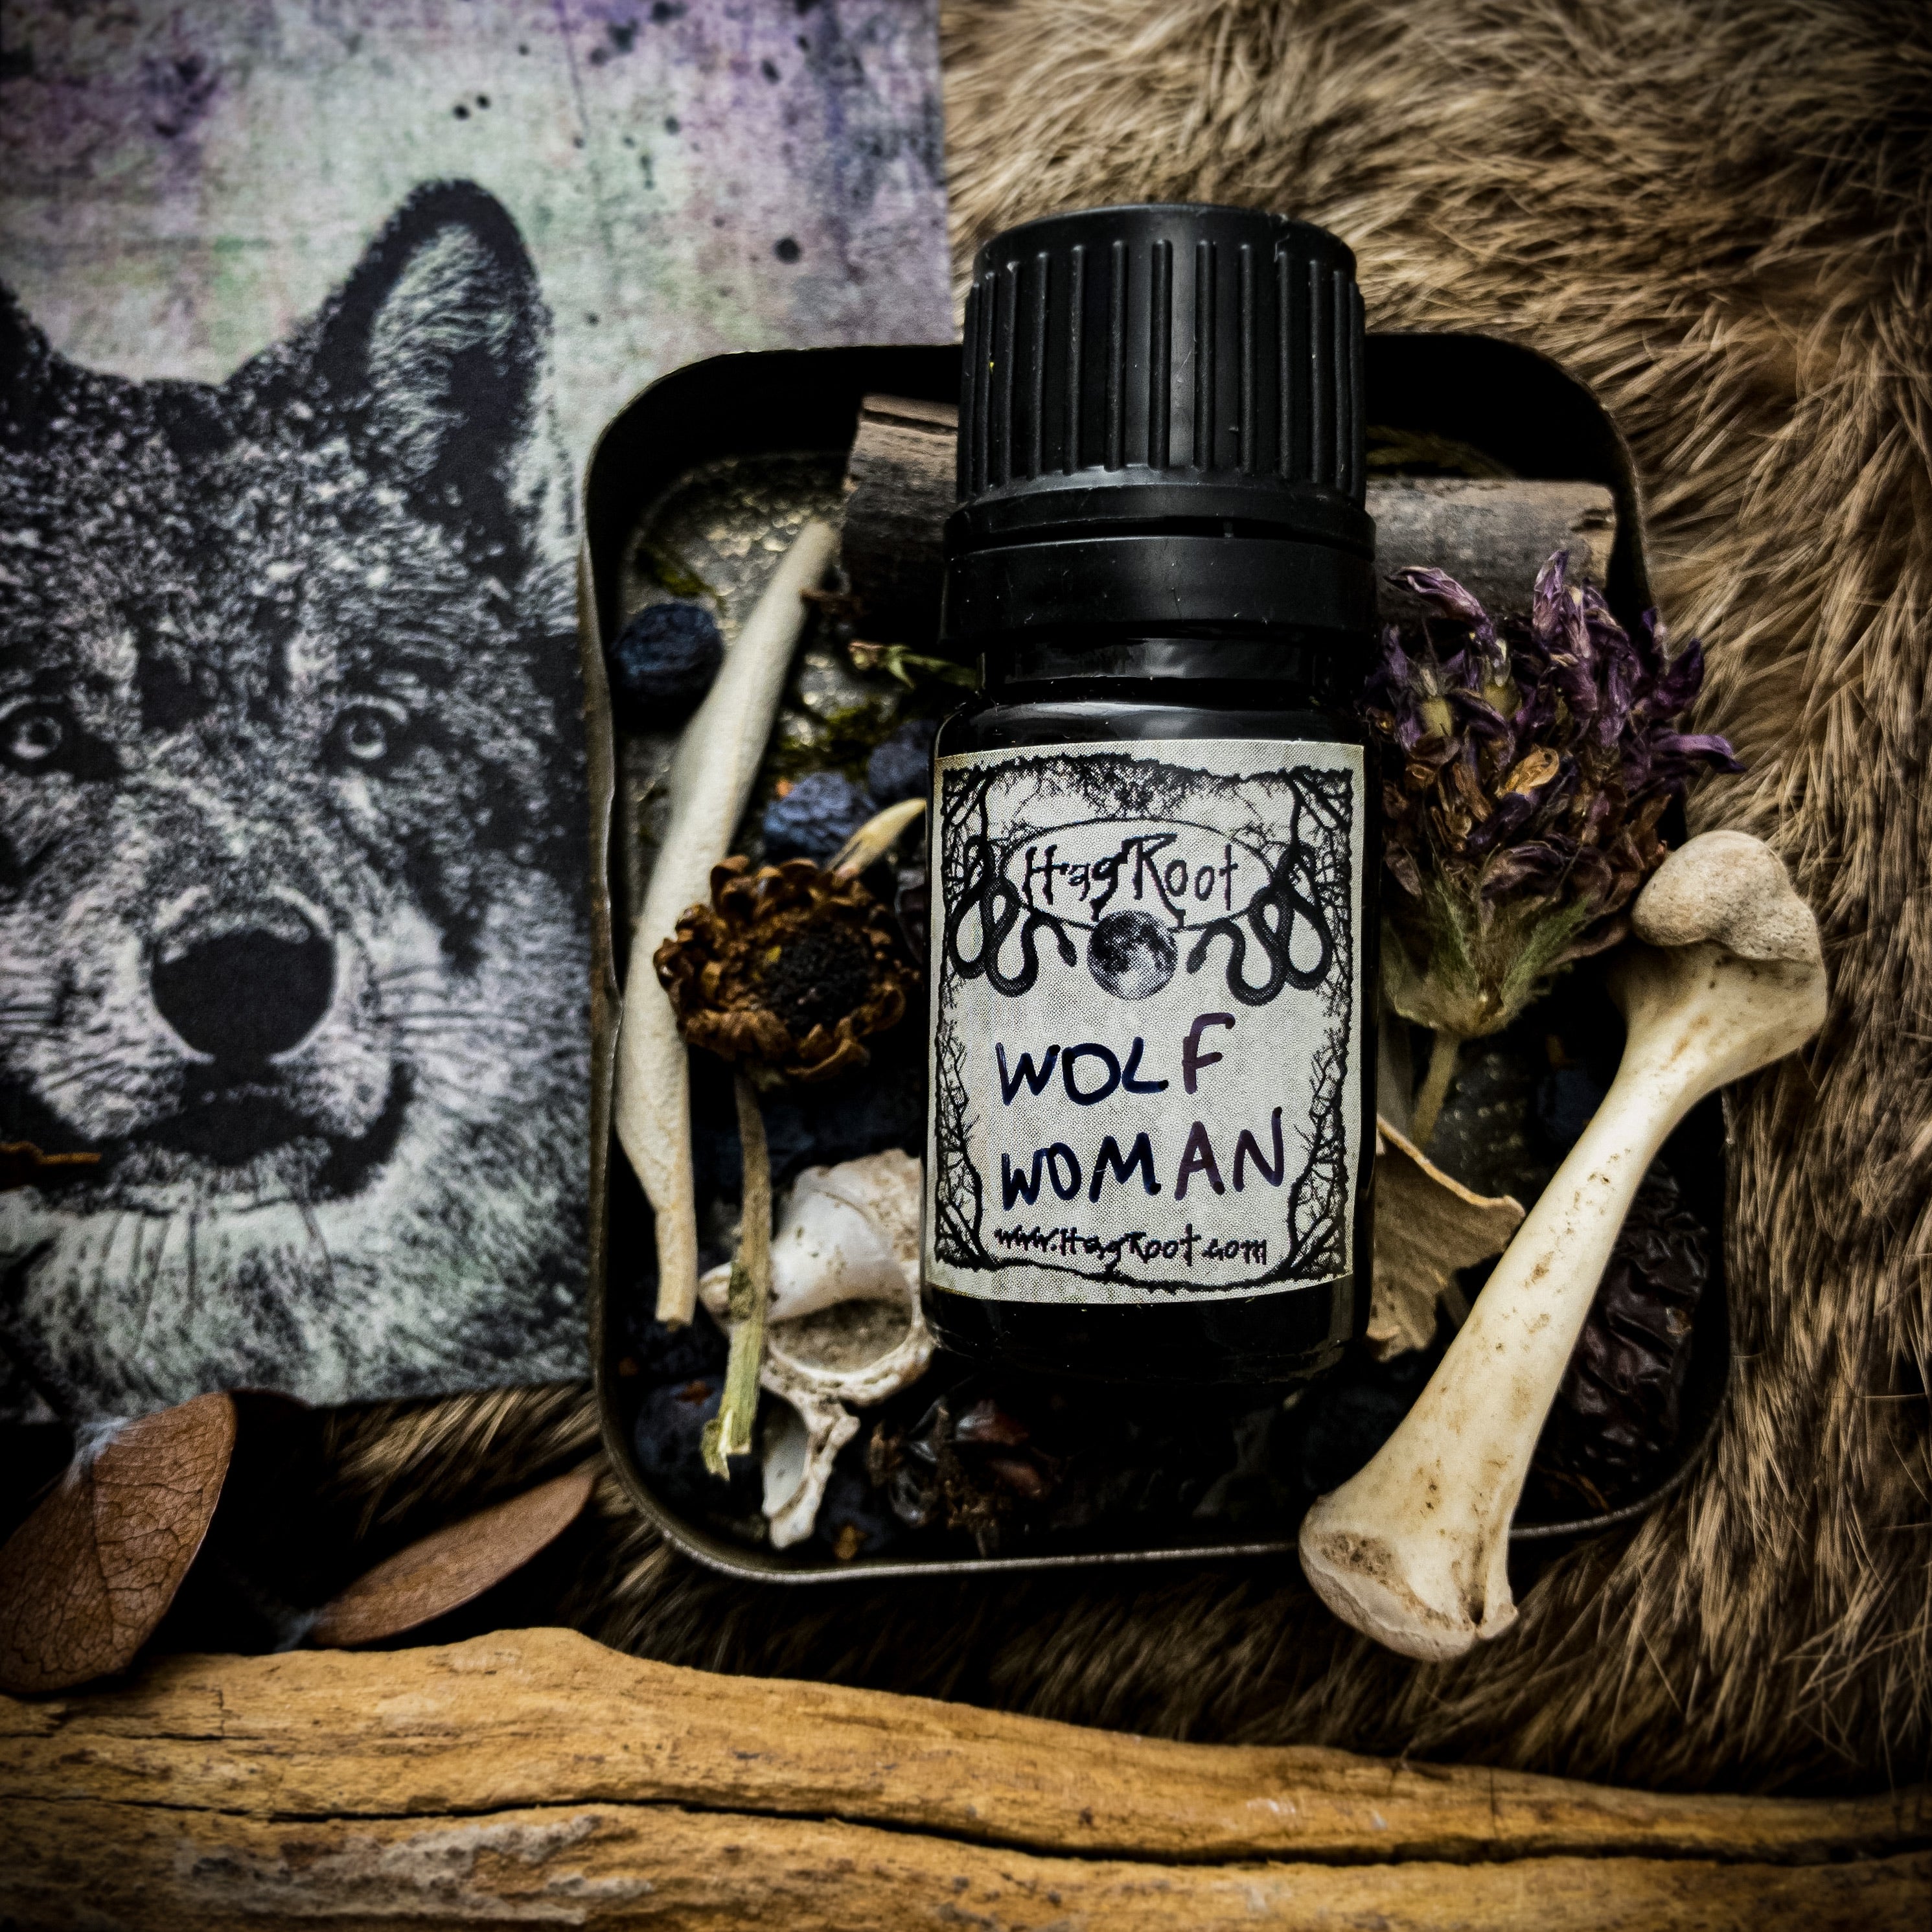 WOLF WOMAN-(Vetiver, Vanilla, Musk, Myrrh, Coumarin, White Sage, Pinion Wood, Amber, Cedar)-Perfume, Cologne, Anointing, Ritual Oil